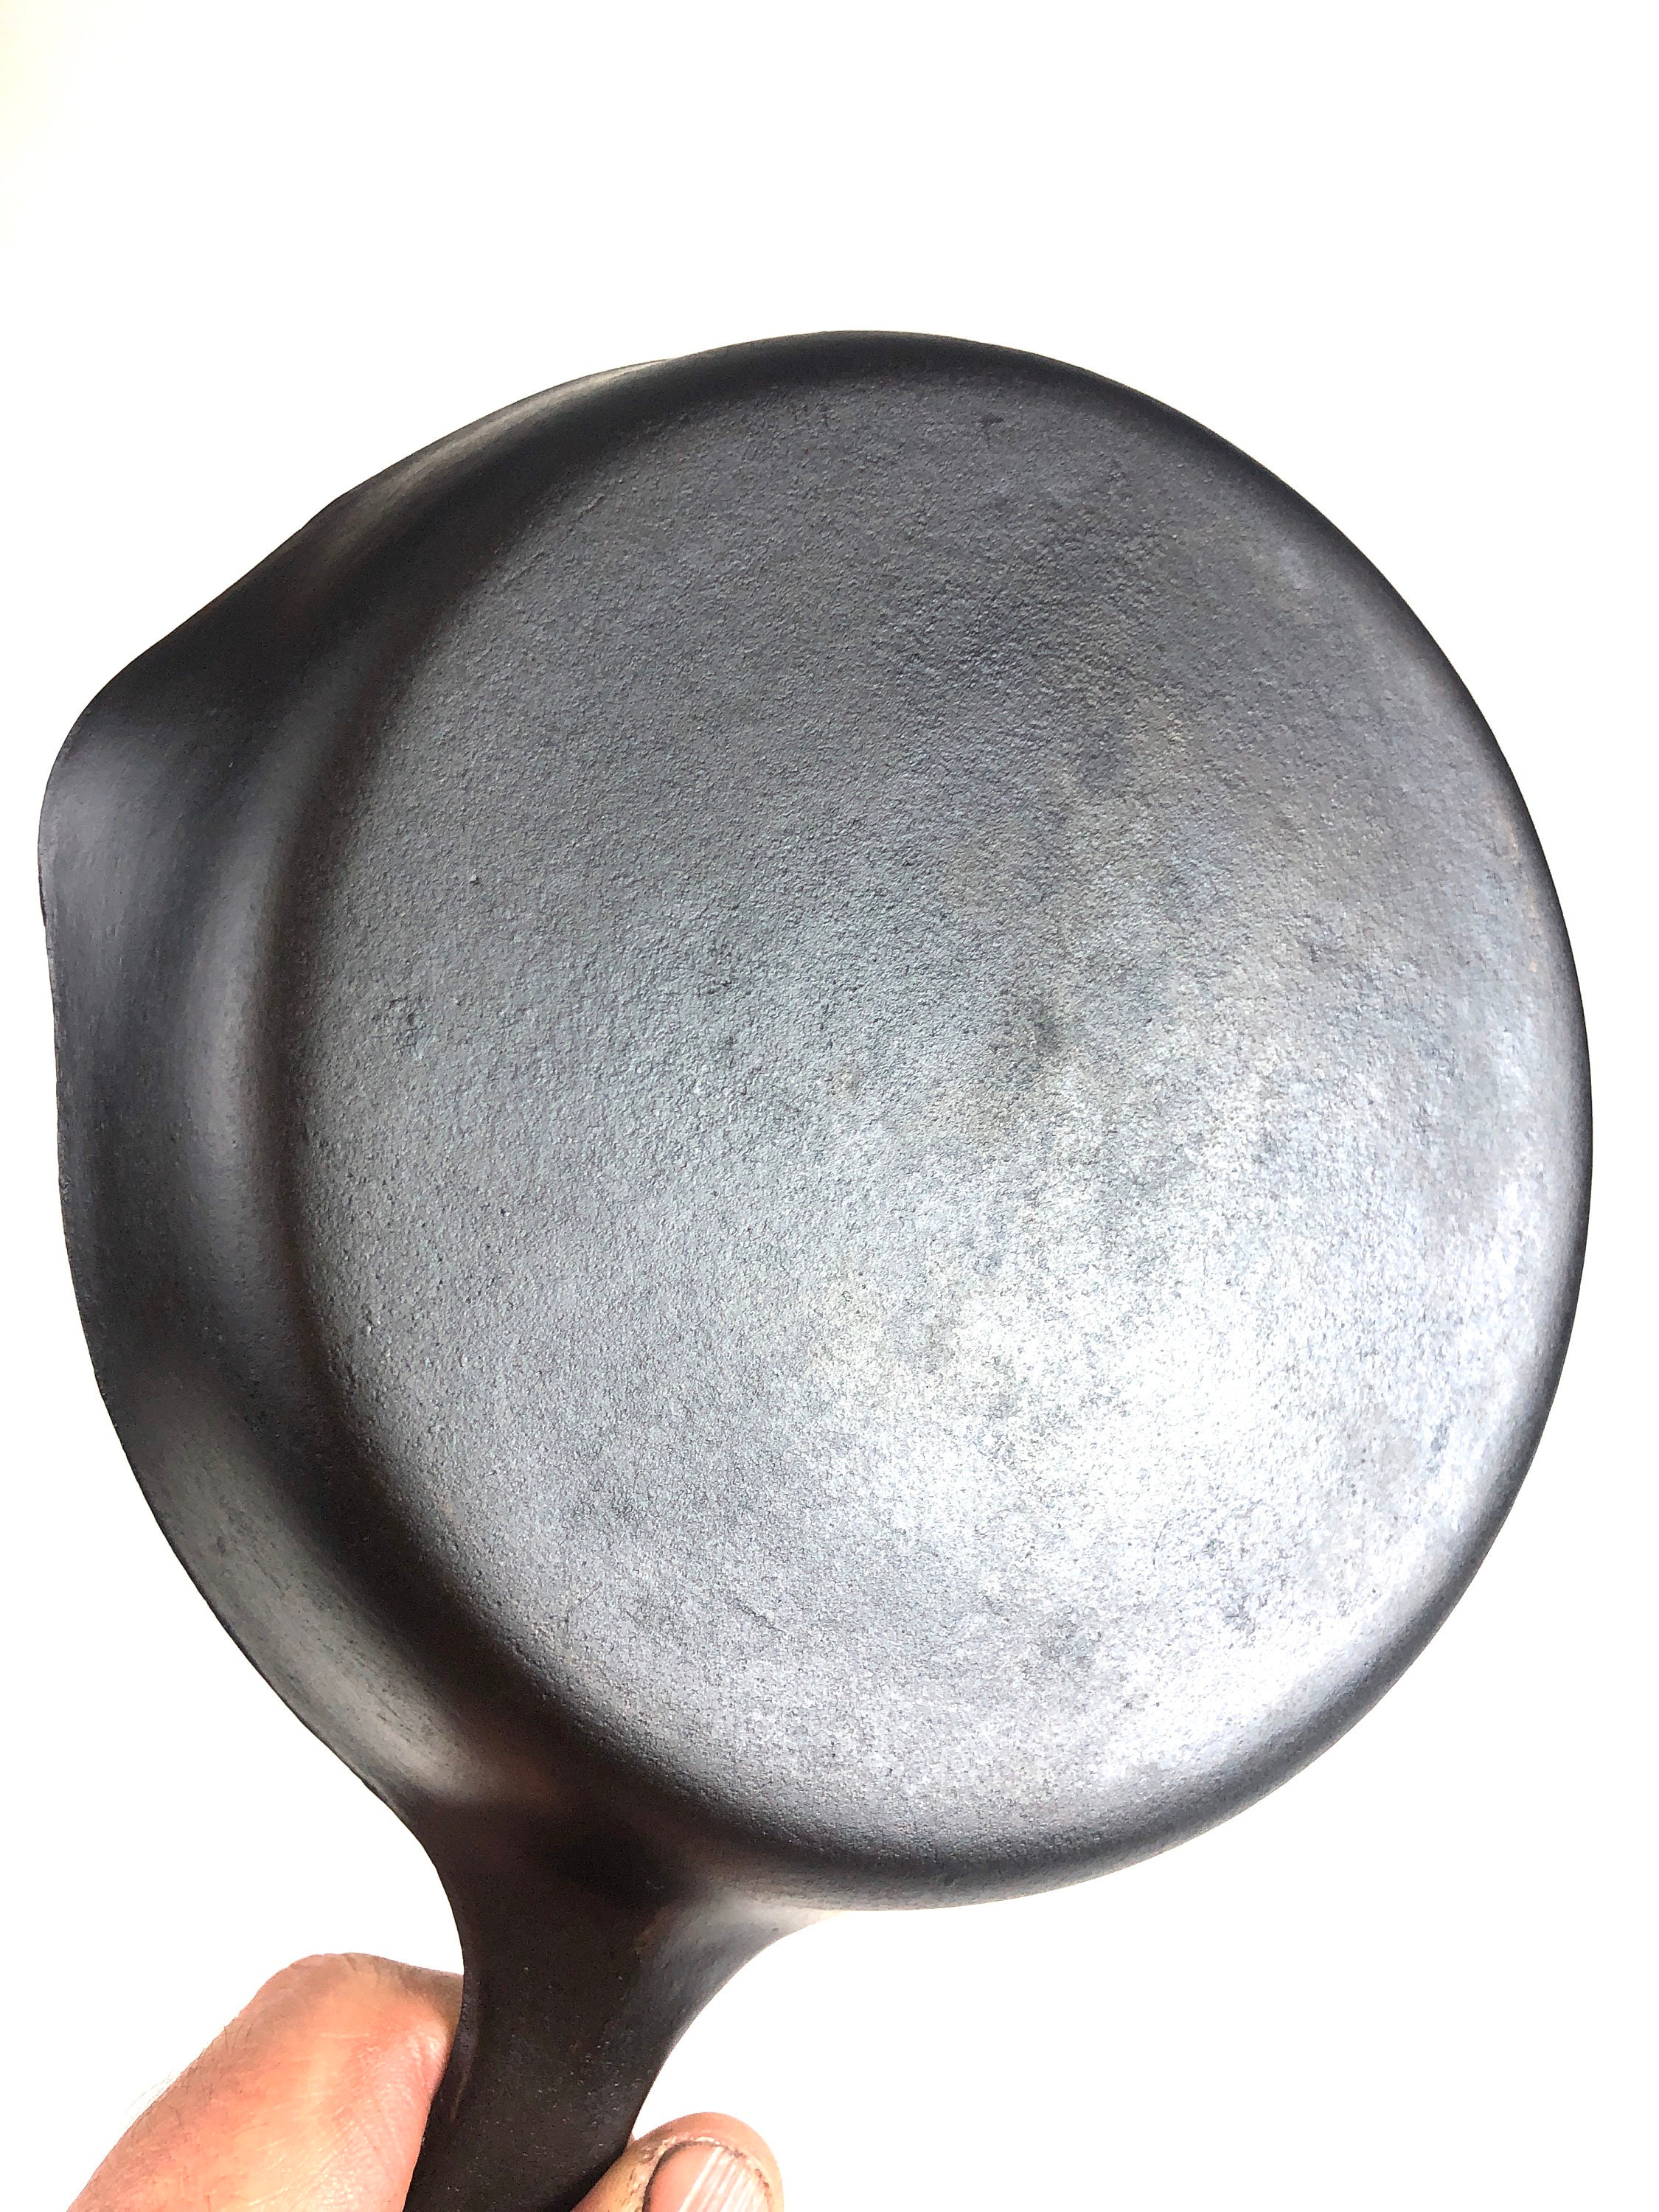 Vintage Small Cast Iron Skillet Pan 5 F Mark on Handle, 1-2 Egg Skillet